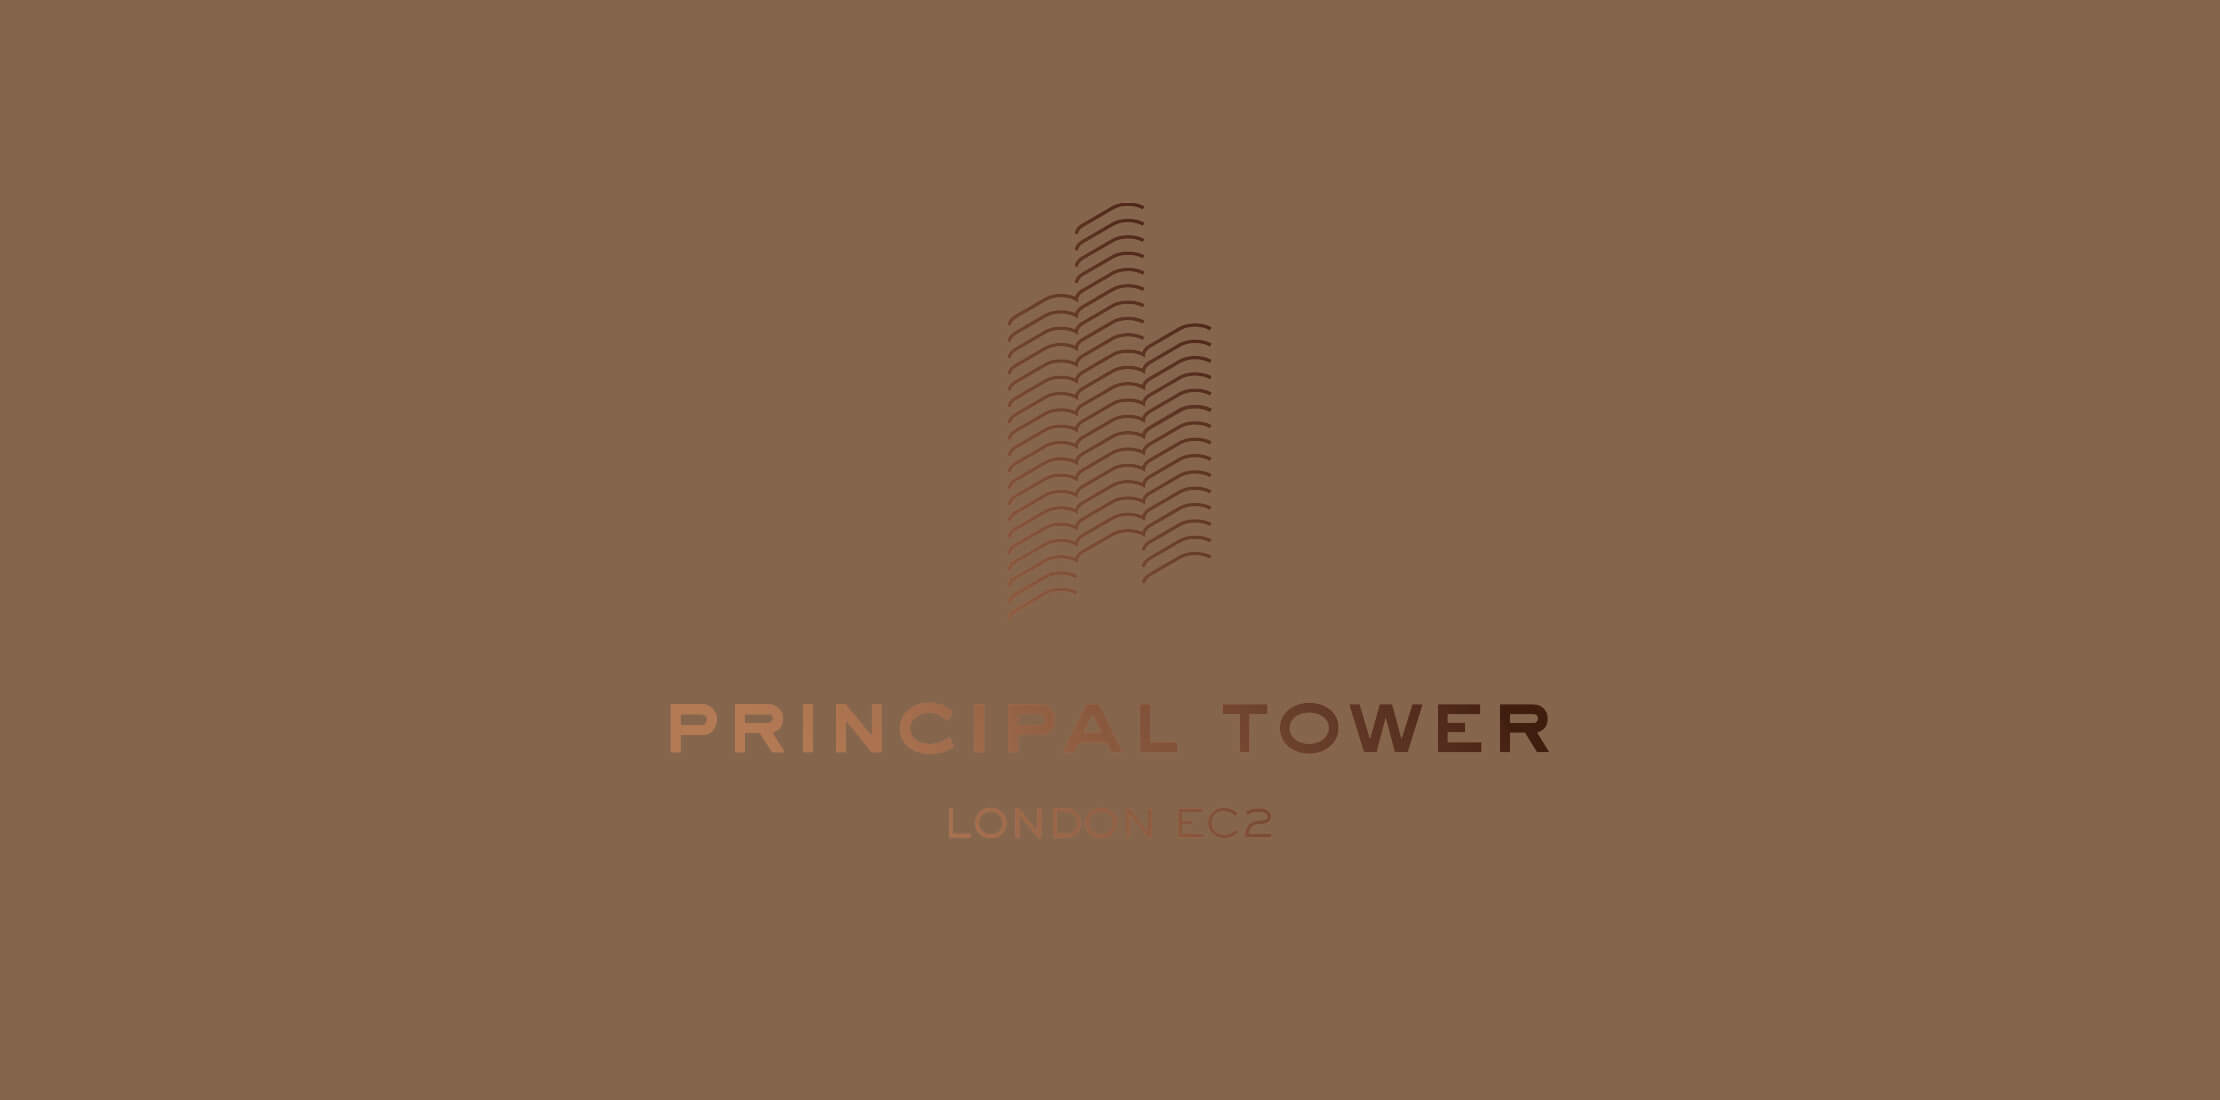 Principal Tower logo set in gold foil on a dark gold background